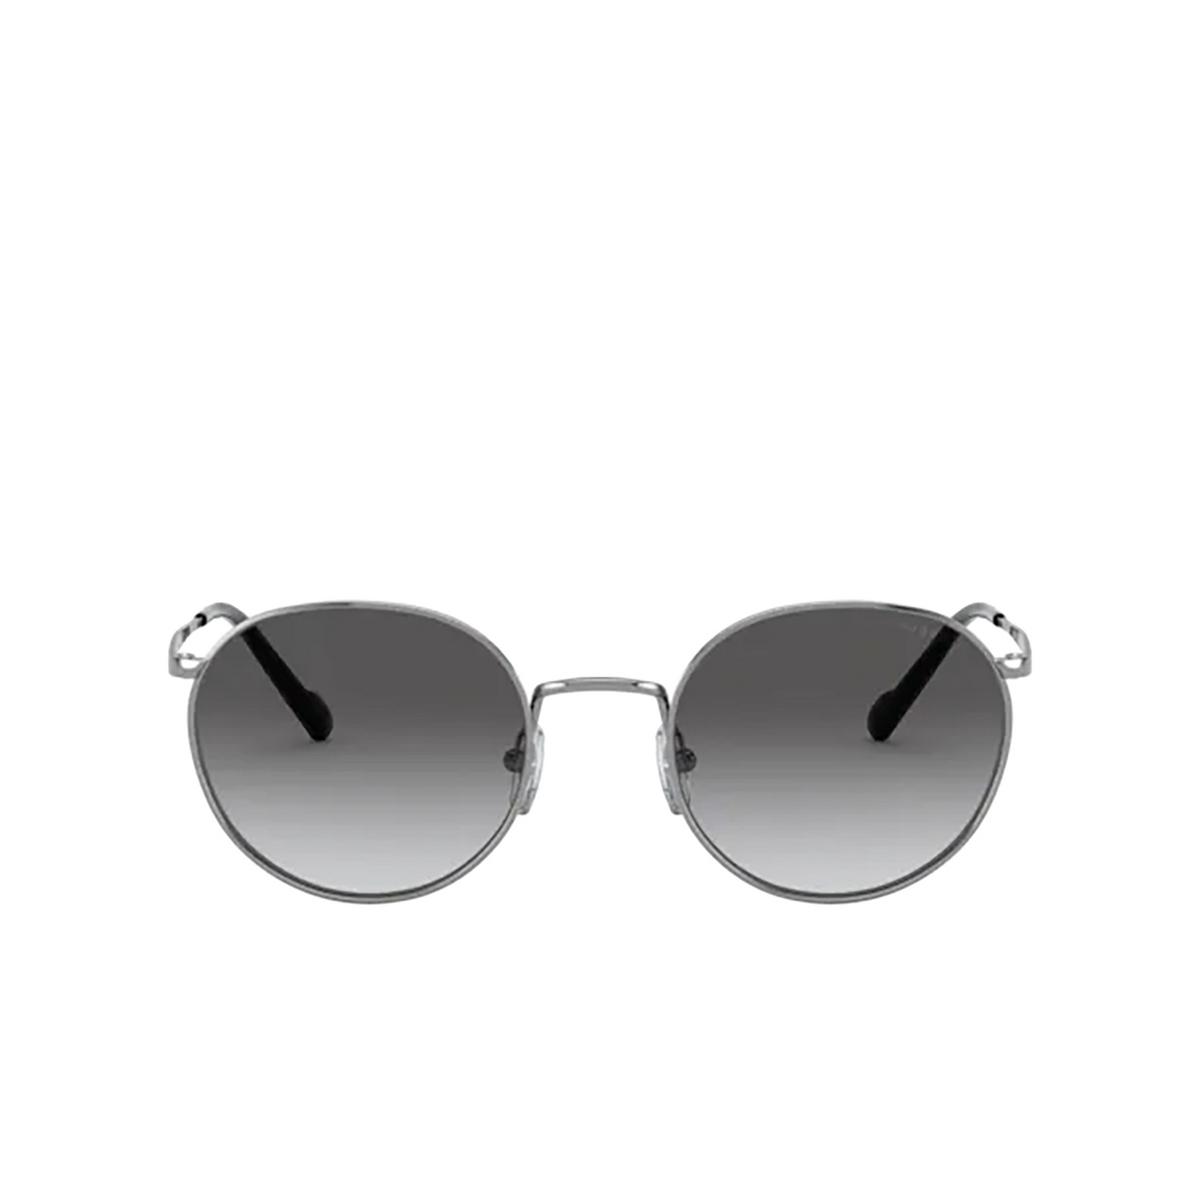 Vogue® Round Sunglasses: VO4182S color Gunmetal 548/11 - front view.